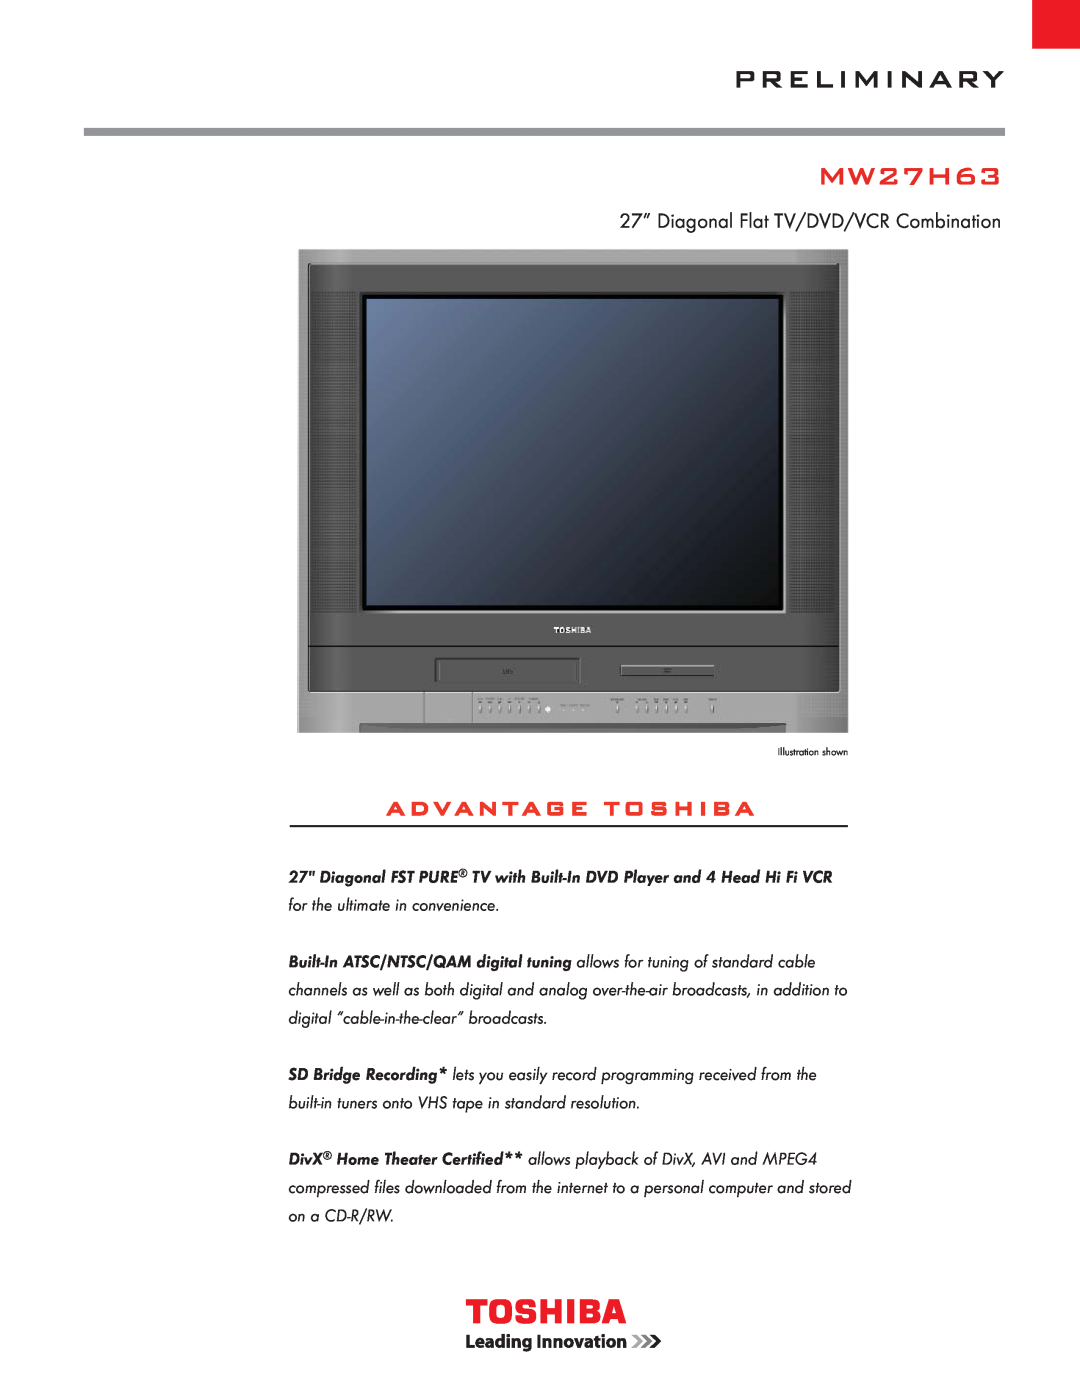 Toshiba MW27H63 manual Preliminary, Advantage Toshiba, 27” Diagonal Flat TV/DVD/VCR Combination 